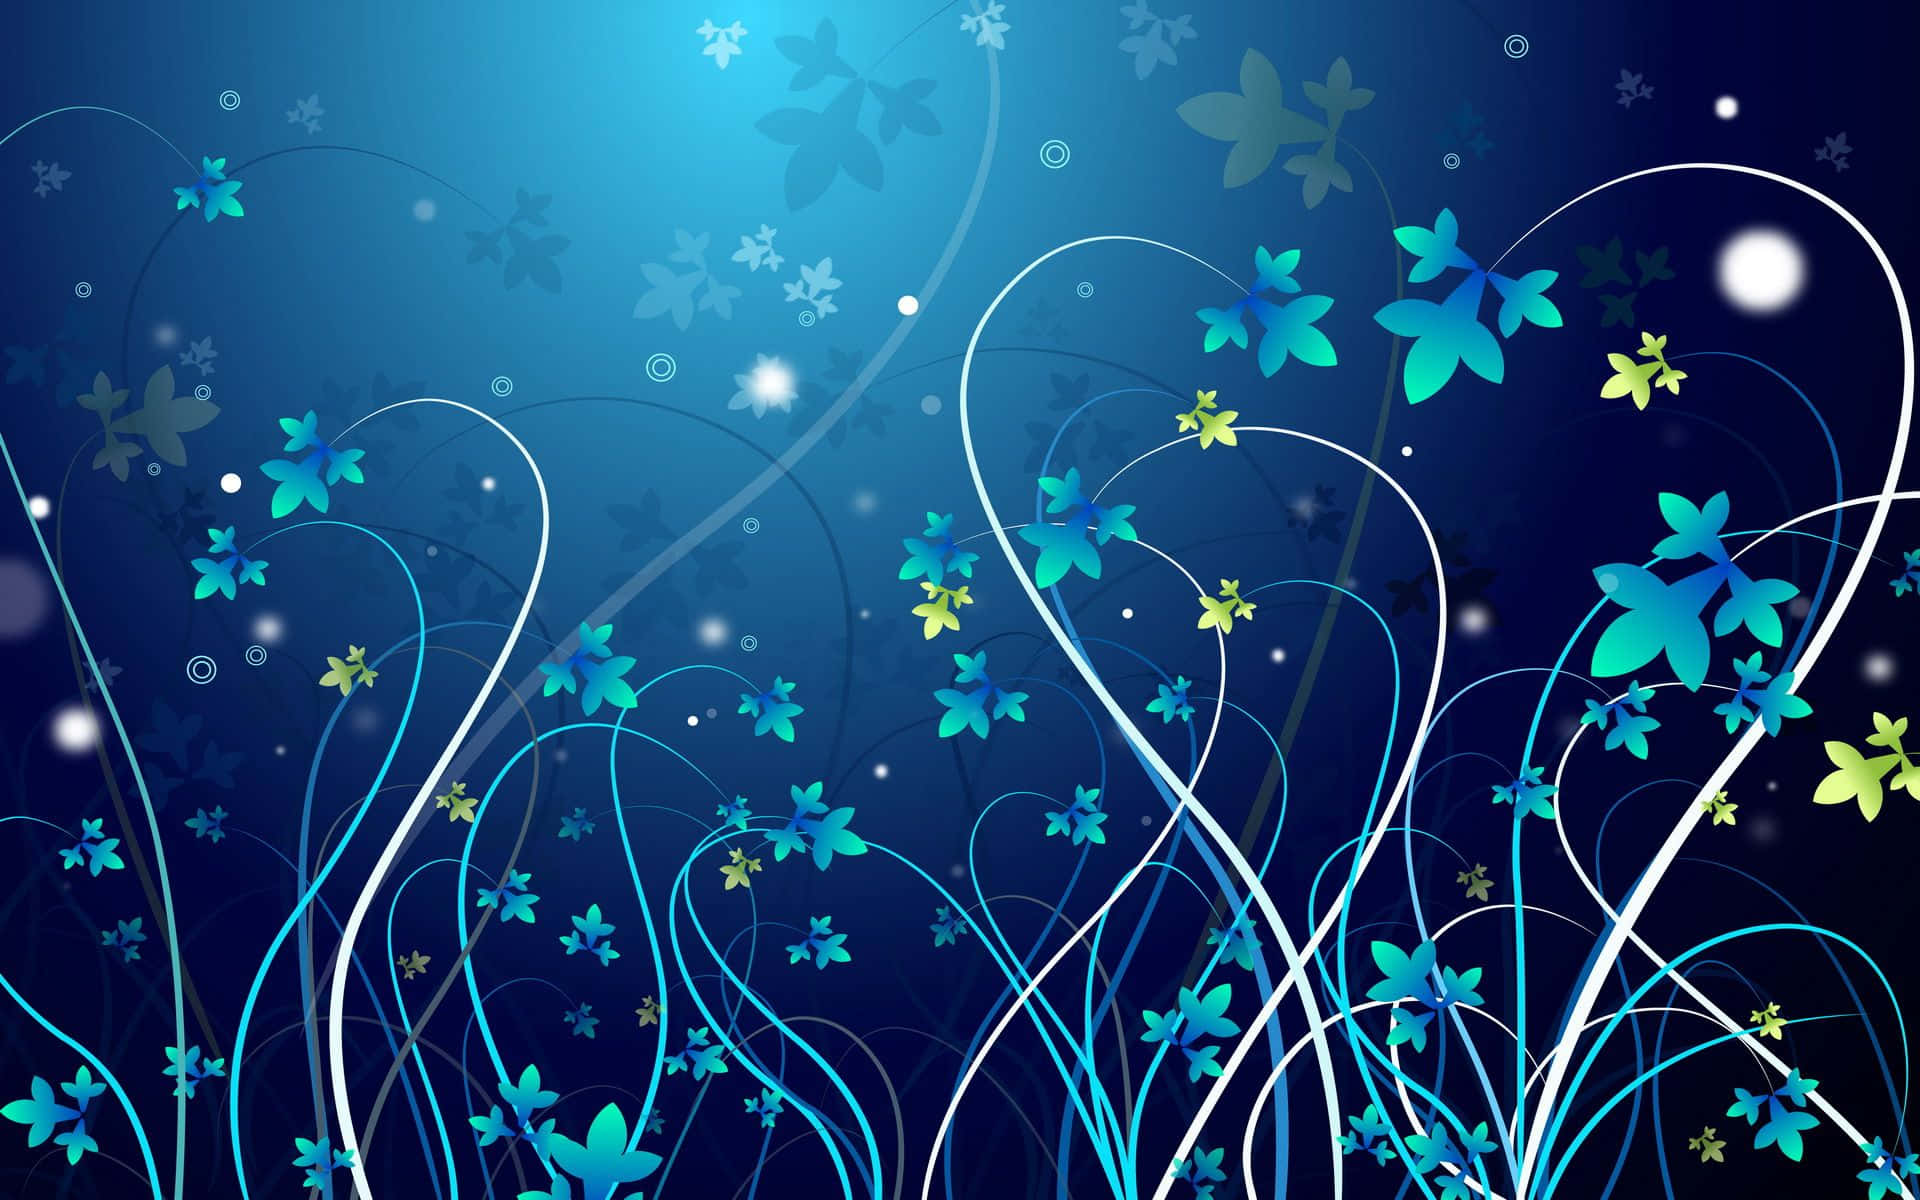 Unpintoresco Paisaje De Invierno Adornado Con Flores Vibrantes En Plena Floración. Fondo de pantalla